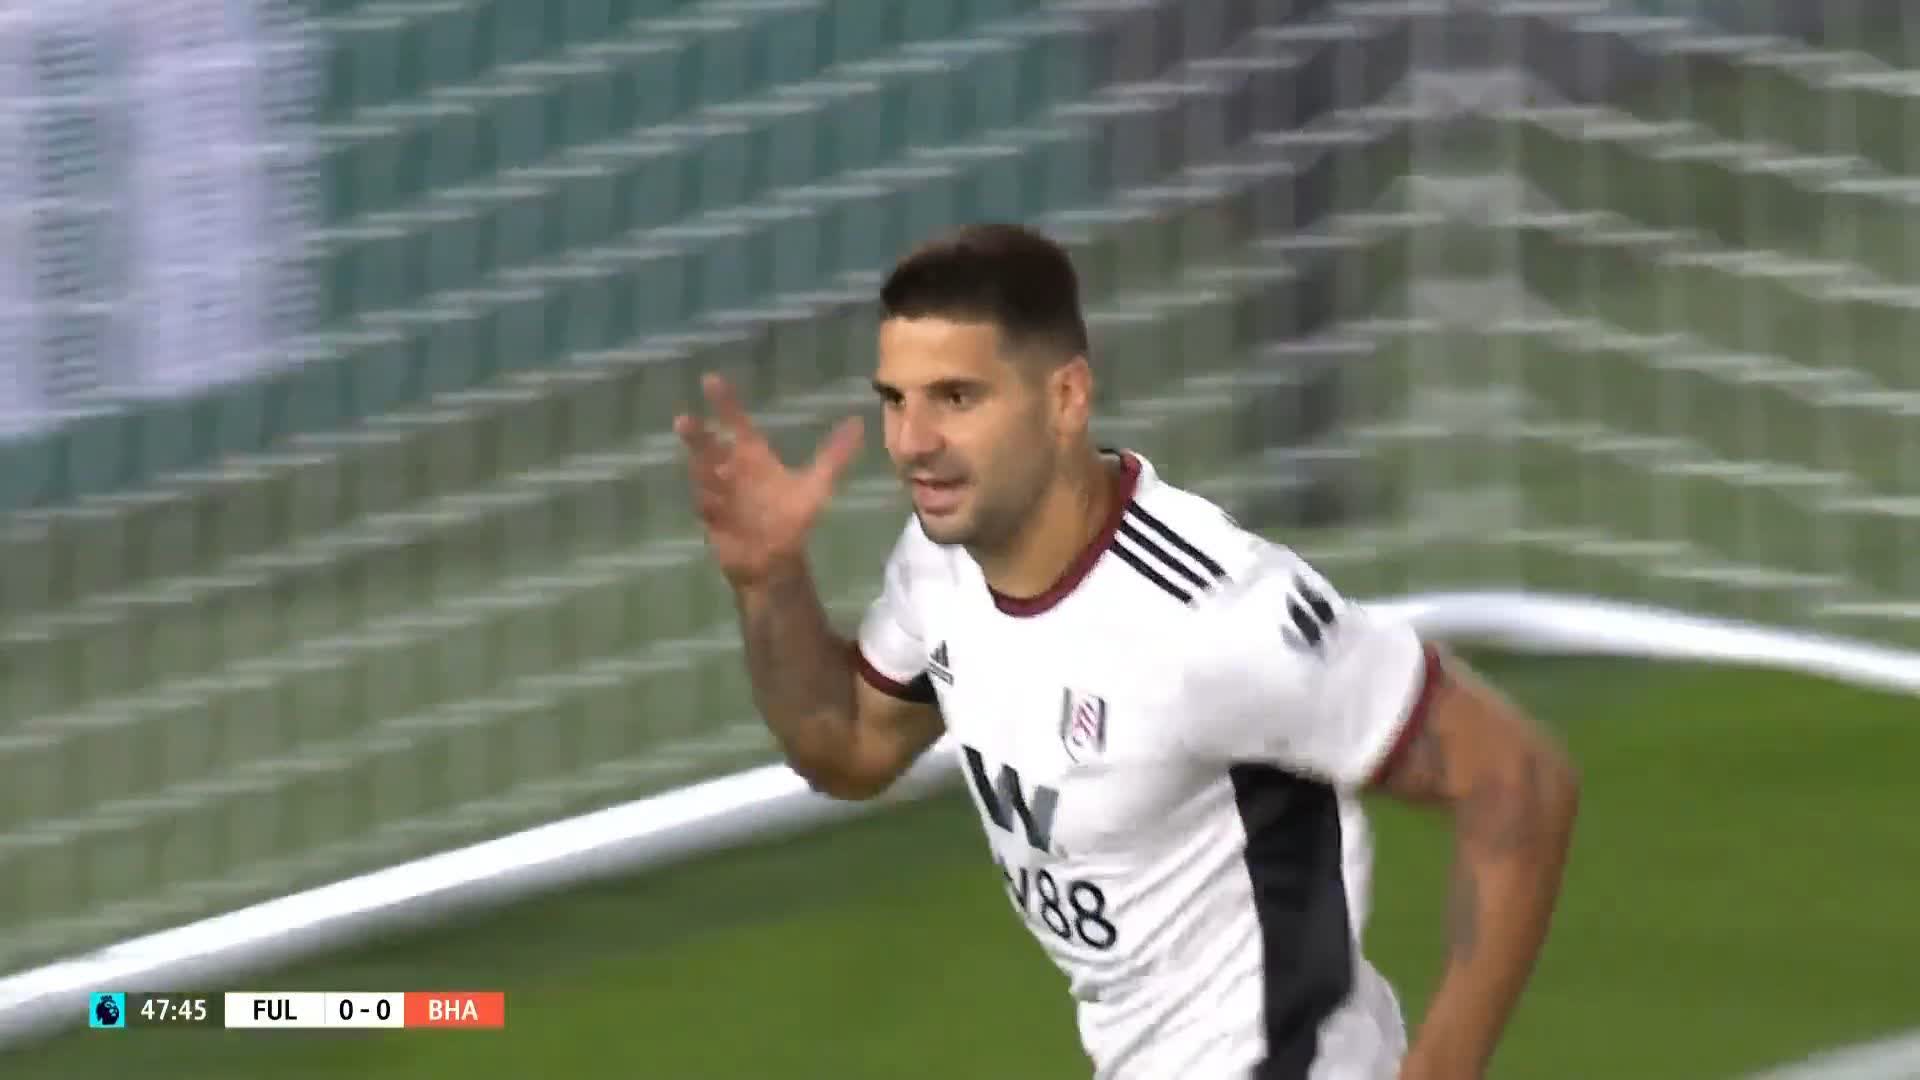 Mitrović.
Scores.
Goals.

Aleksandar Mitrović brings up 💯 league goals for Fulham! 👏”